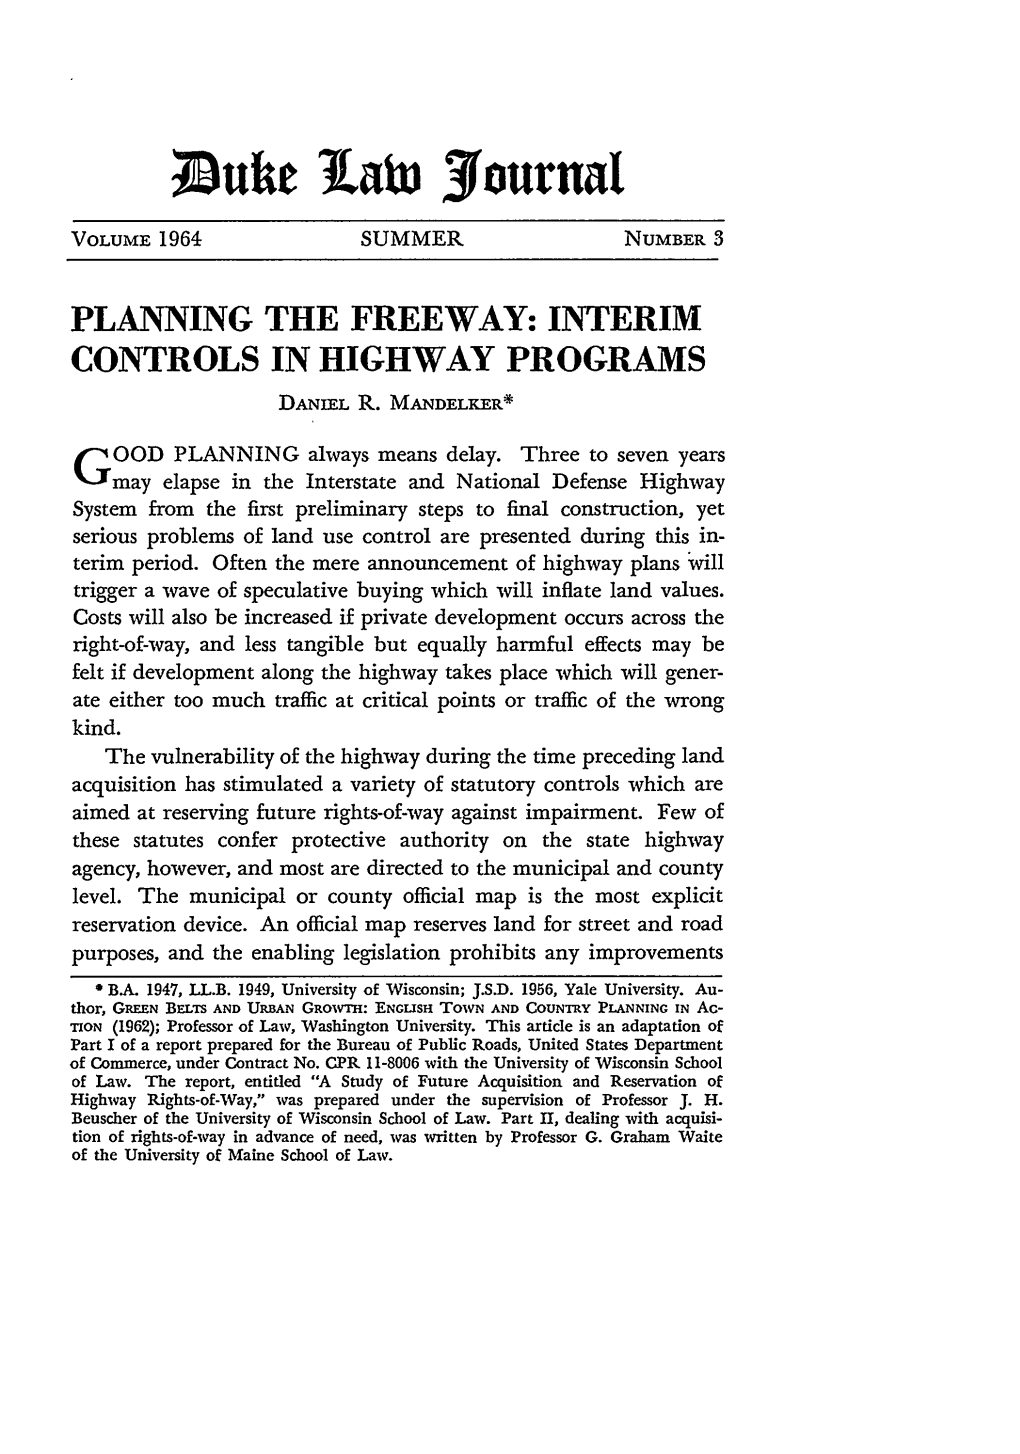 Planning the Freeway: Interim Controls in Highway Programs